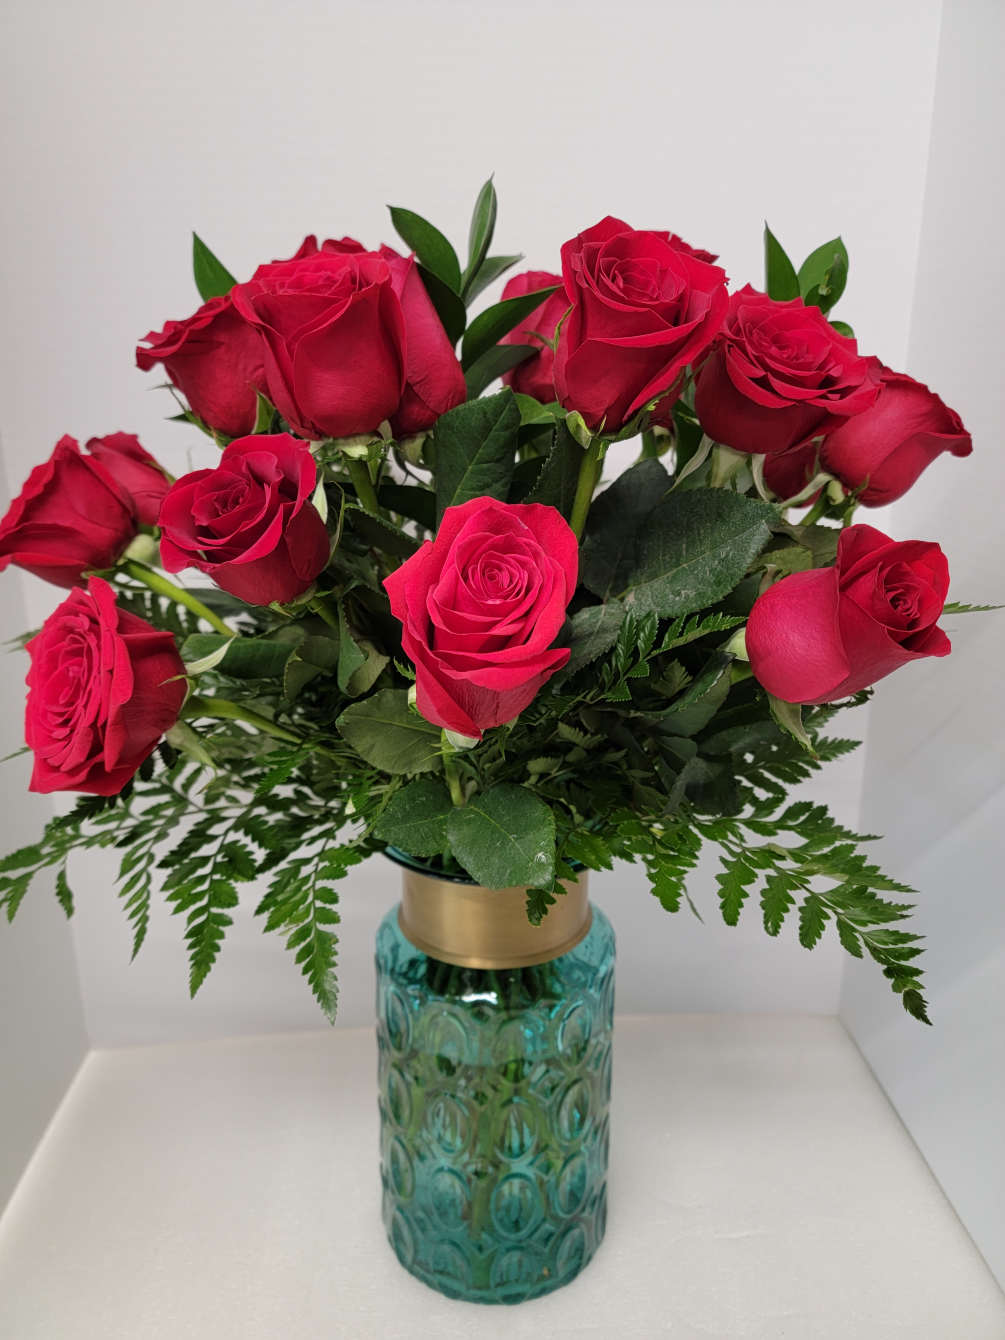 Twelve red roses and greens in a very elegant aqua vase.